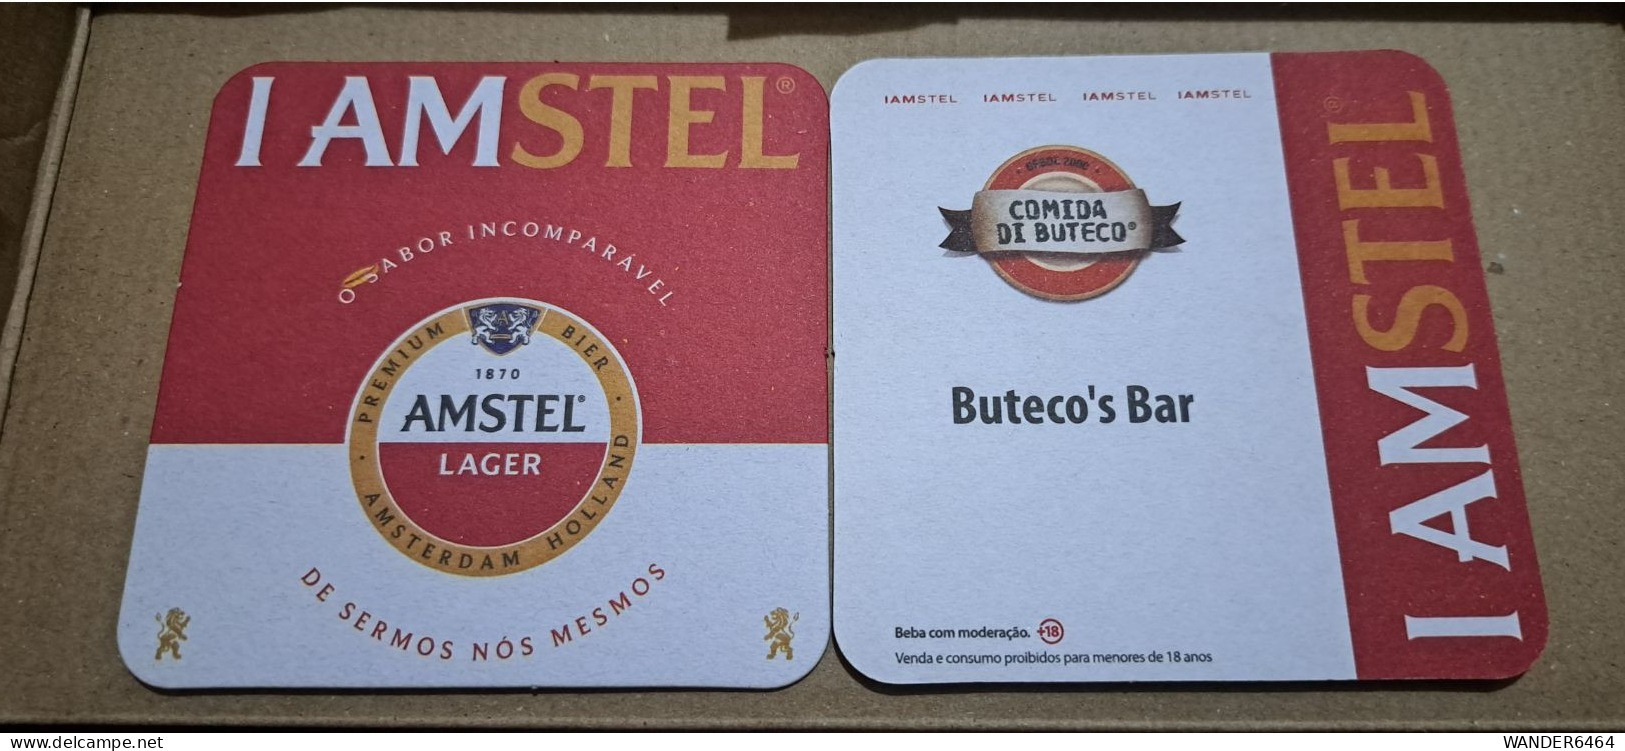 AMSTEL HISTORIC SET BRAZIL BREWERY  BEER  MATS - COASTERS #048  BUTECO'S BAR - Bierdeckel